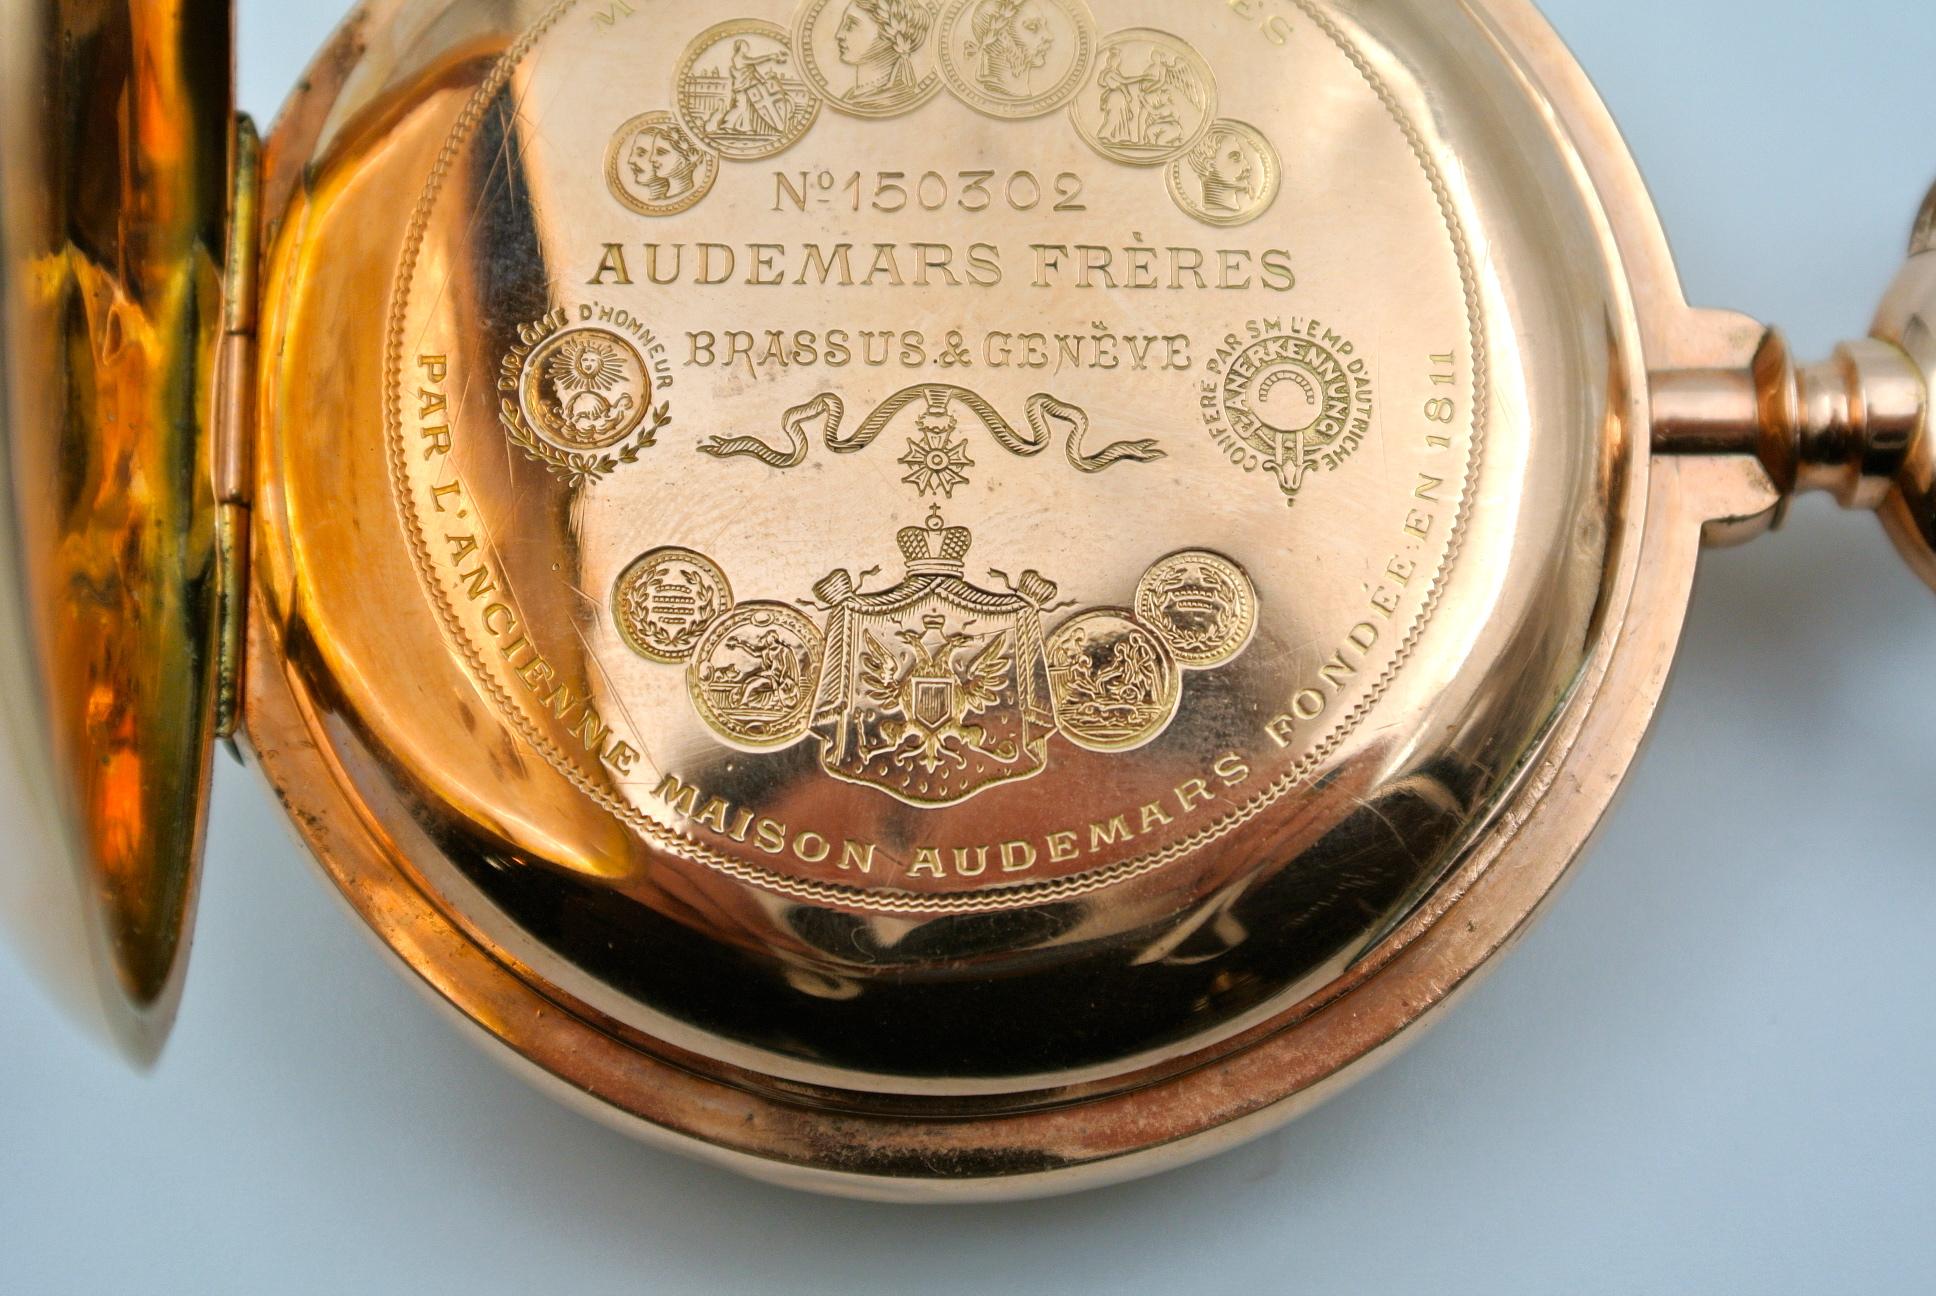 19th Century Pocket Watch, Gousset Watch, with 18-Carat Gold Mechanism